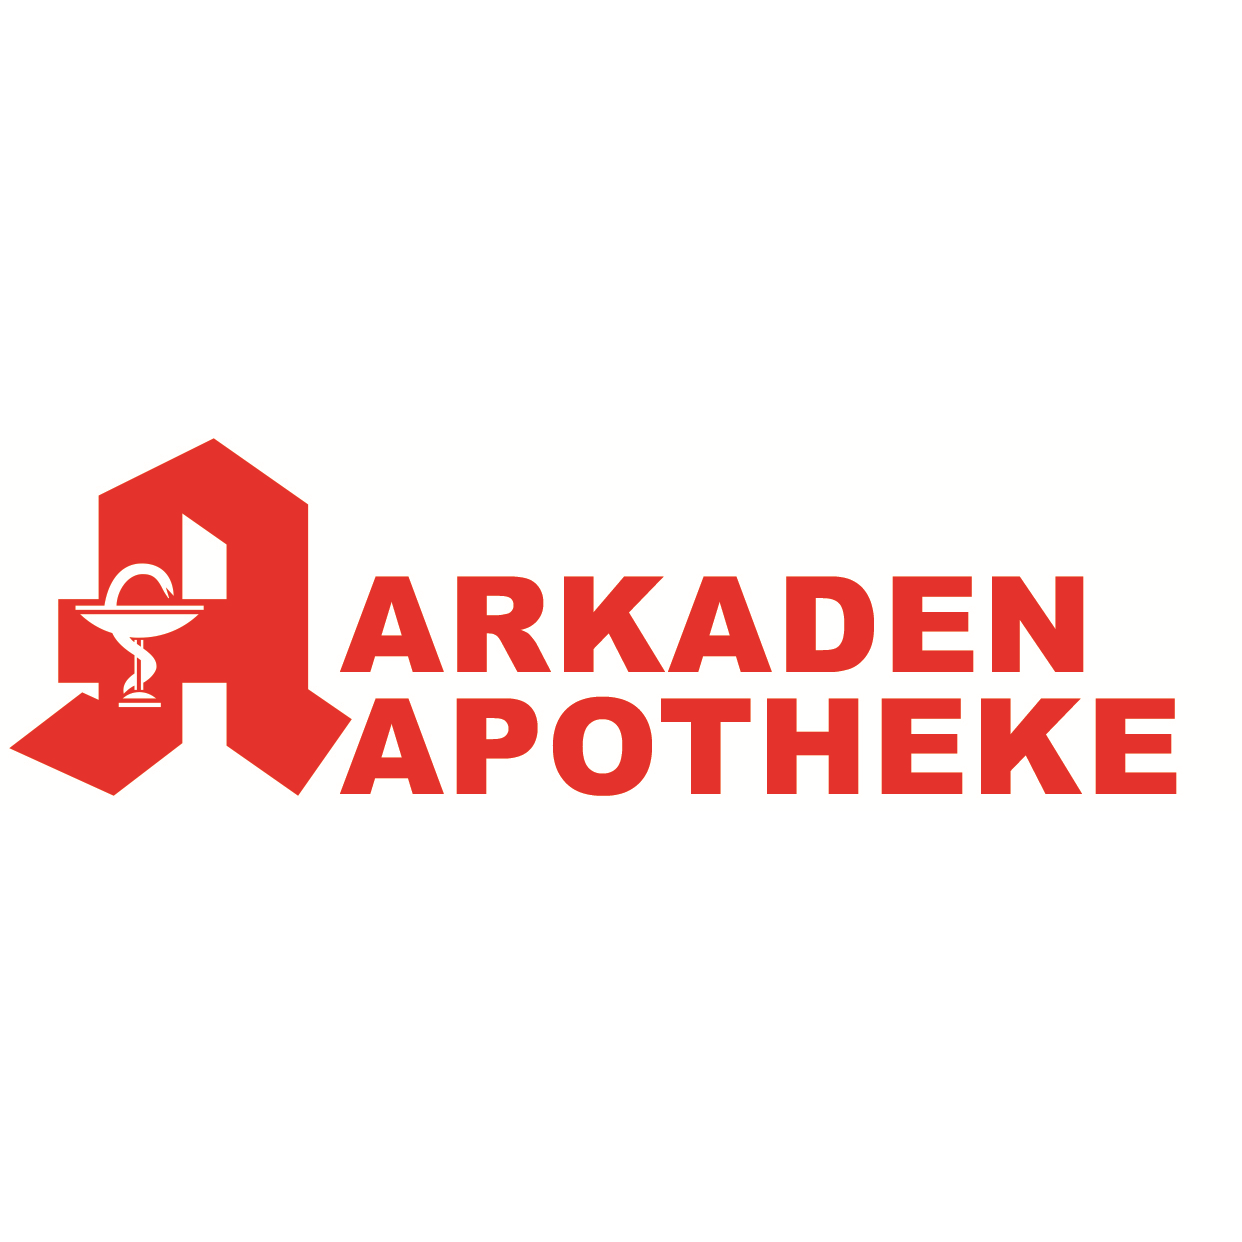 Arkaden-Apotheke in Duisburg